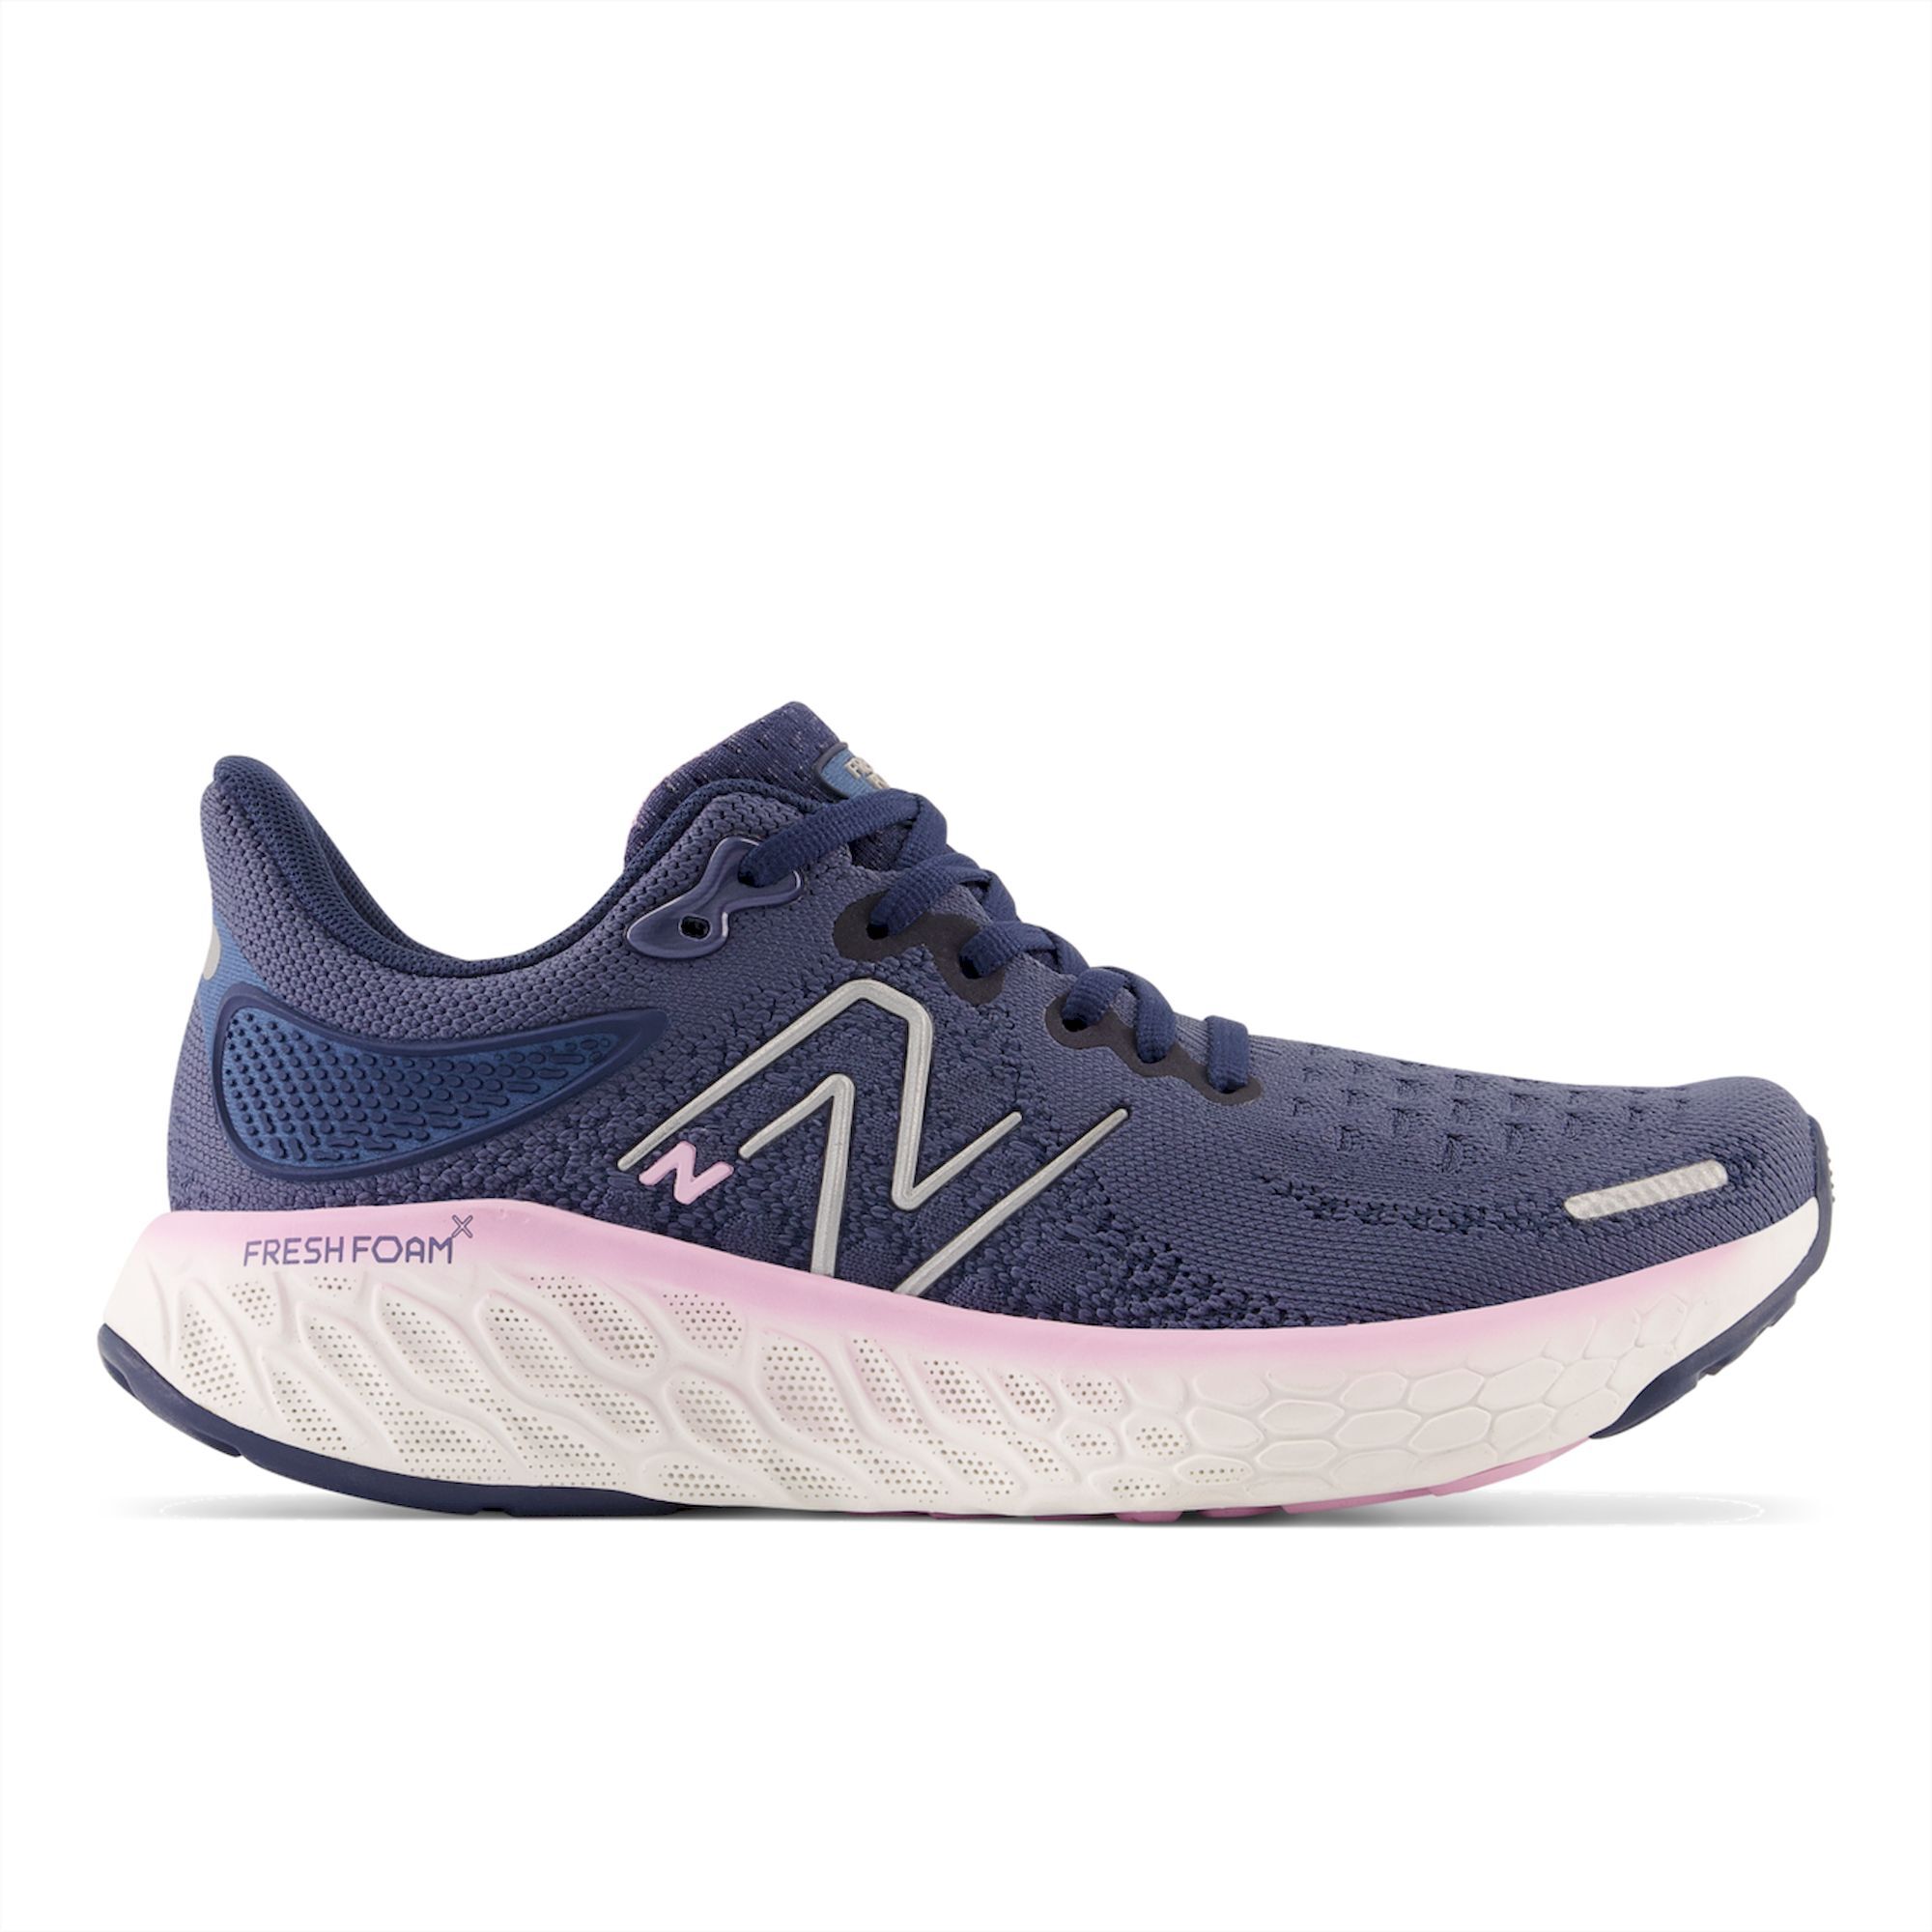 New Balance Fresh Foam 1080 V12 - Running shoes - Women's